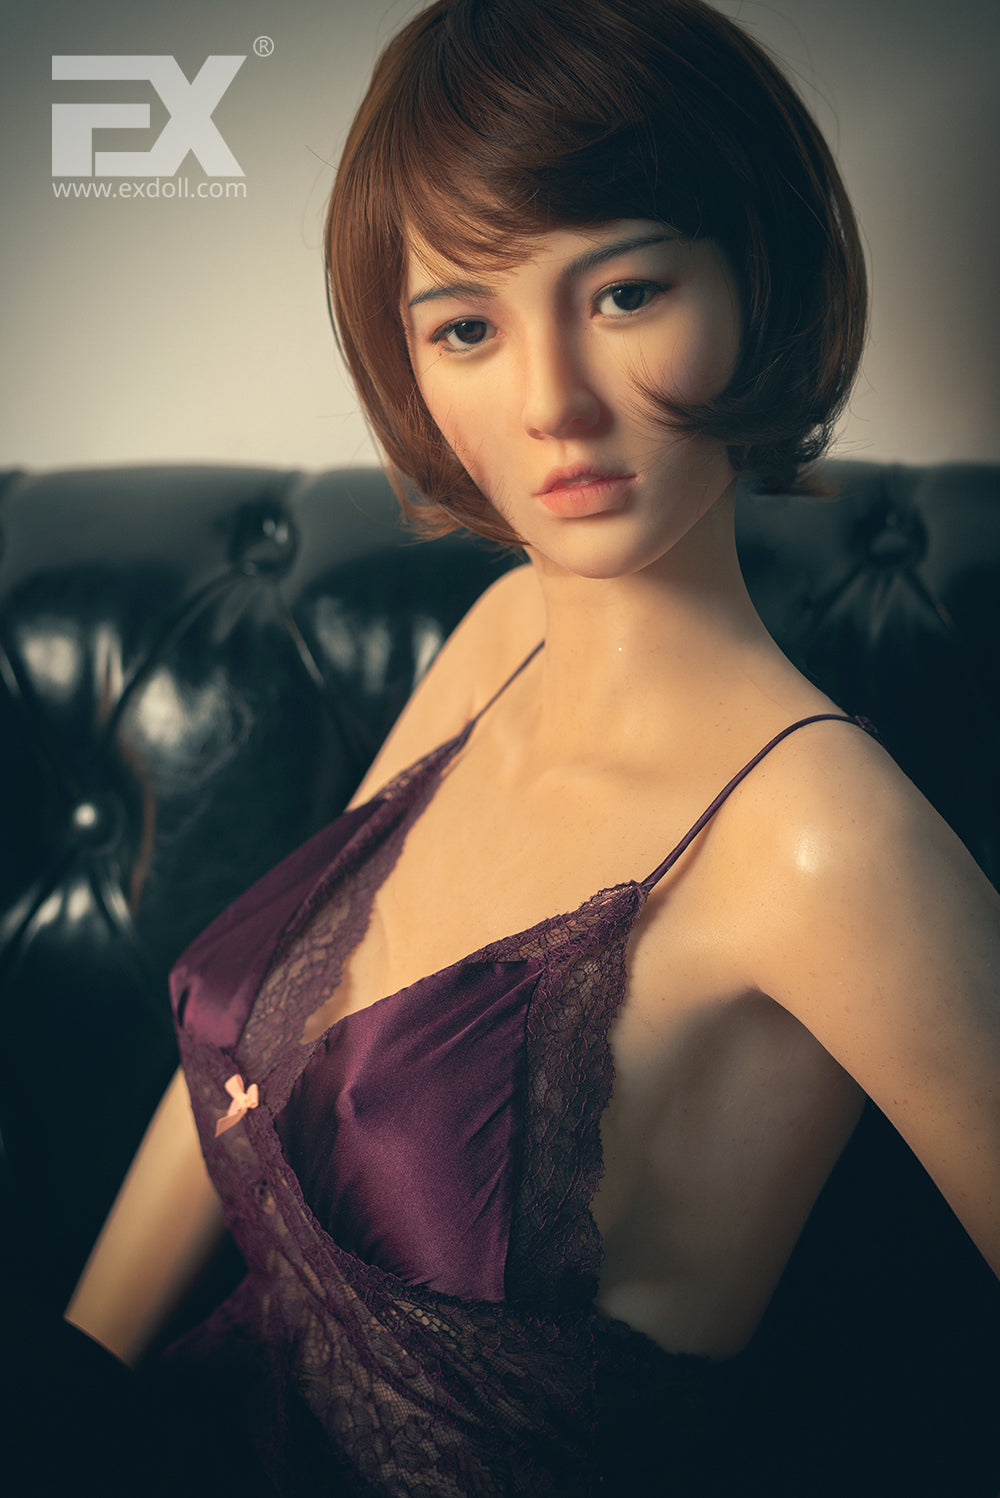 EX Doll Ukiyoe Series 170 cm Silicone - Yang Xian | Buy Sex Dolls at DOLLS ACTUALLY